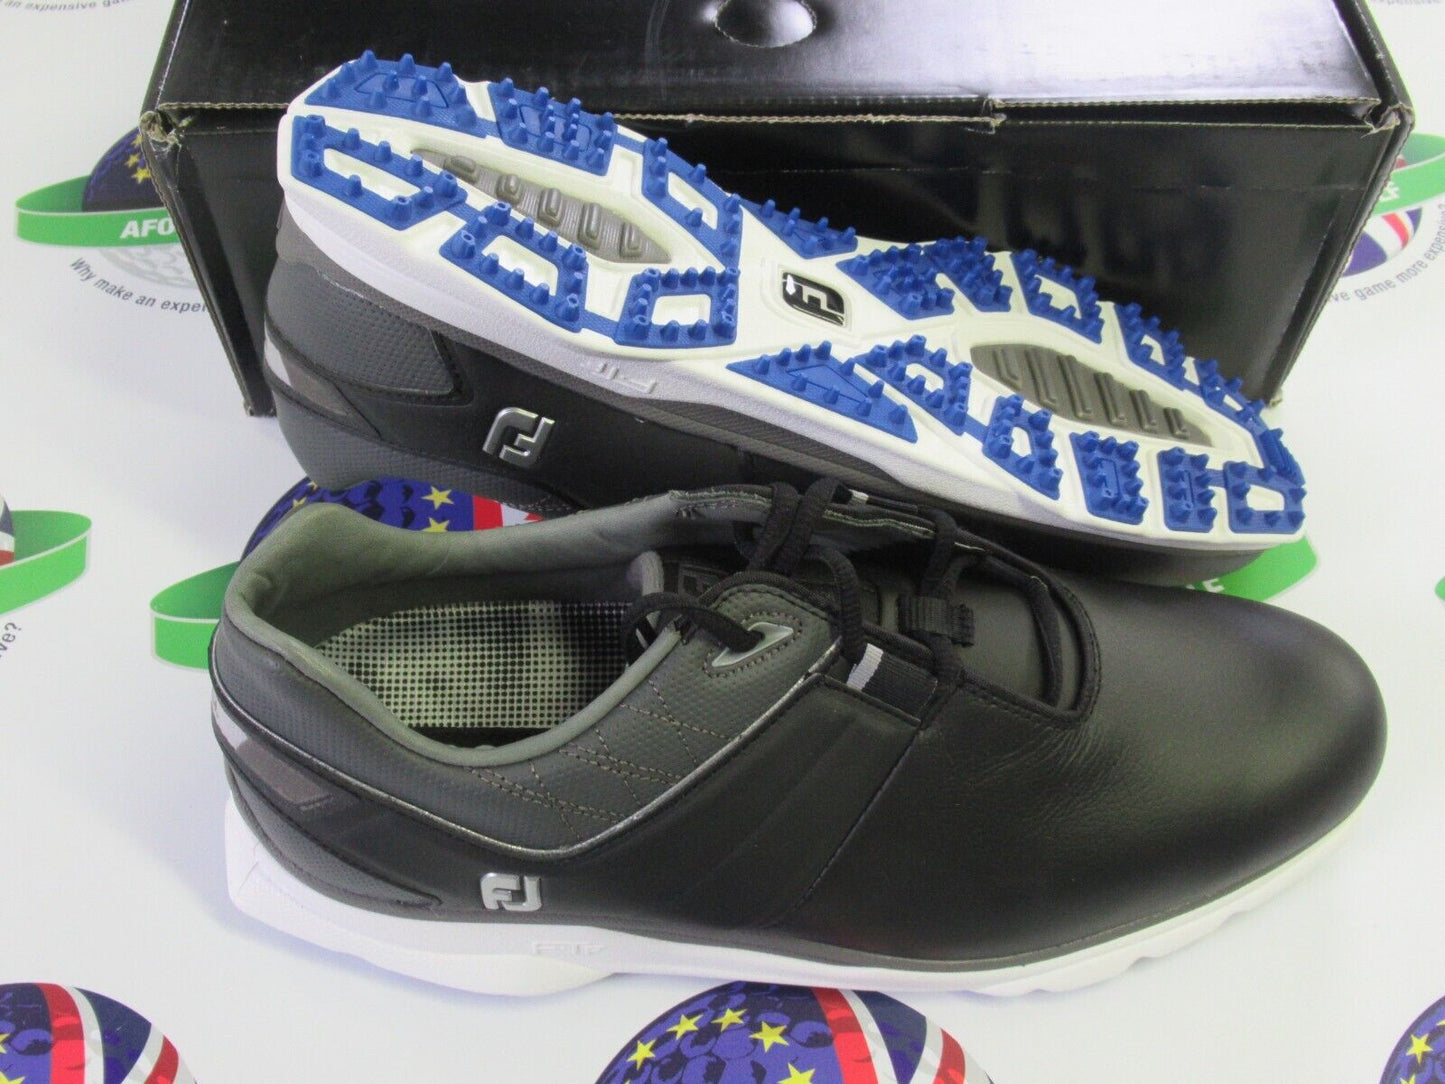 footjoy pro sl waterproof golf shoes black/grey 53077k uk size 9.5 medium